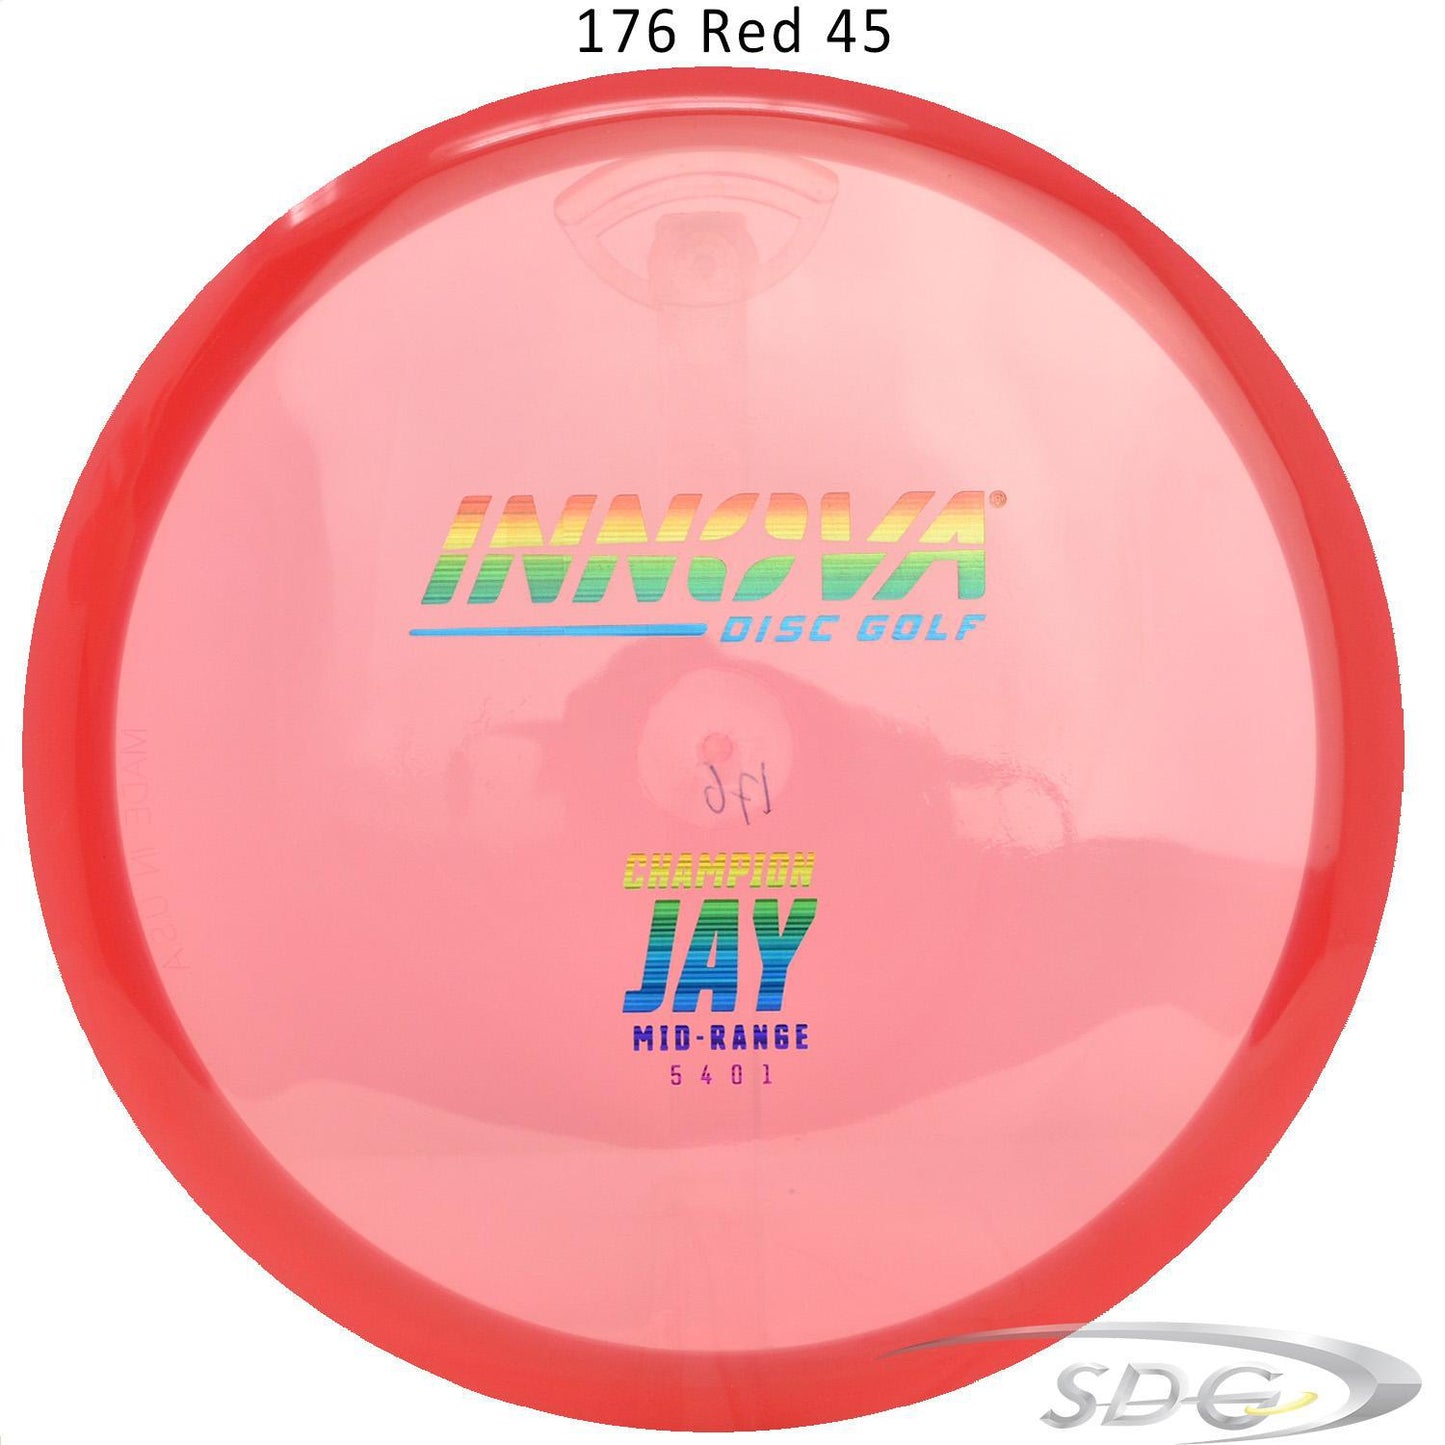 innova-champion-jay-disc-golf-mid-range 176 Red 45 